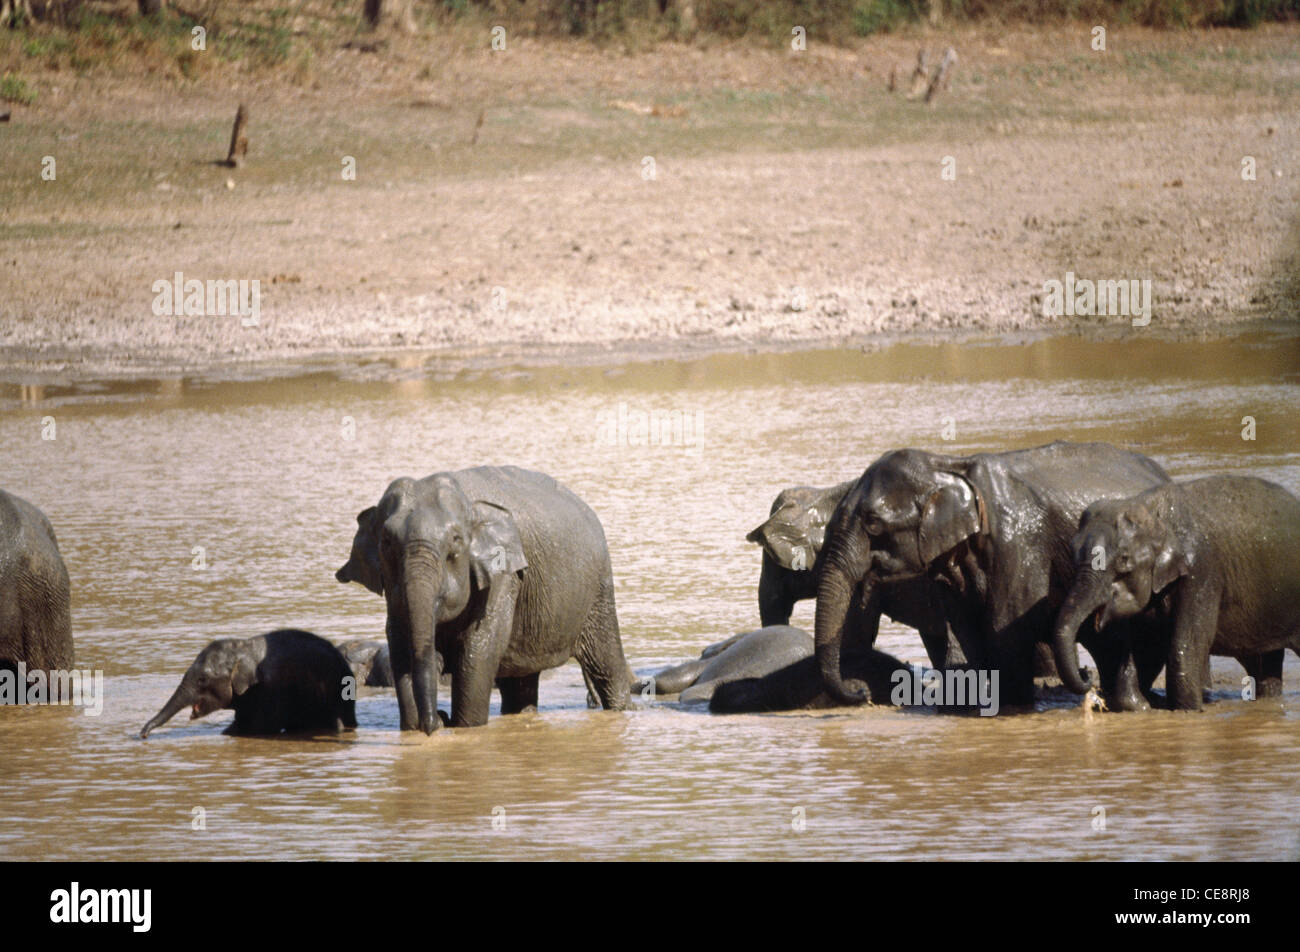 Elefantenfamilie, Kabini River, nagarhole Nationalpark, kodagu, Mysore, Karnataka, Indien - vit 80682 Stockfoto